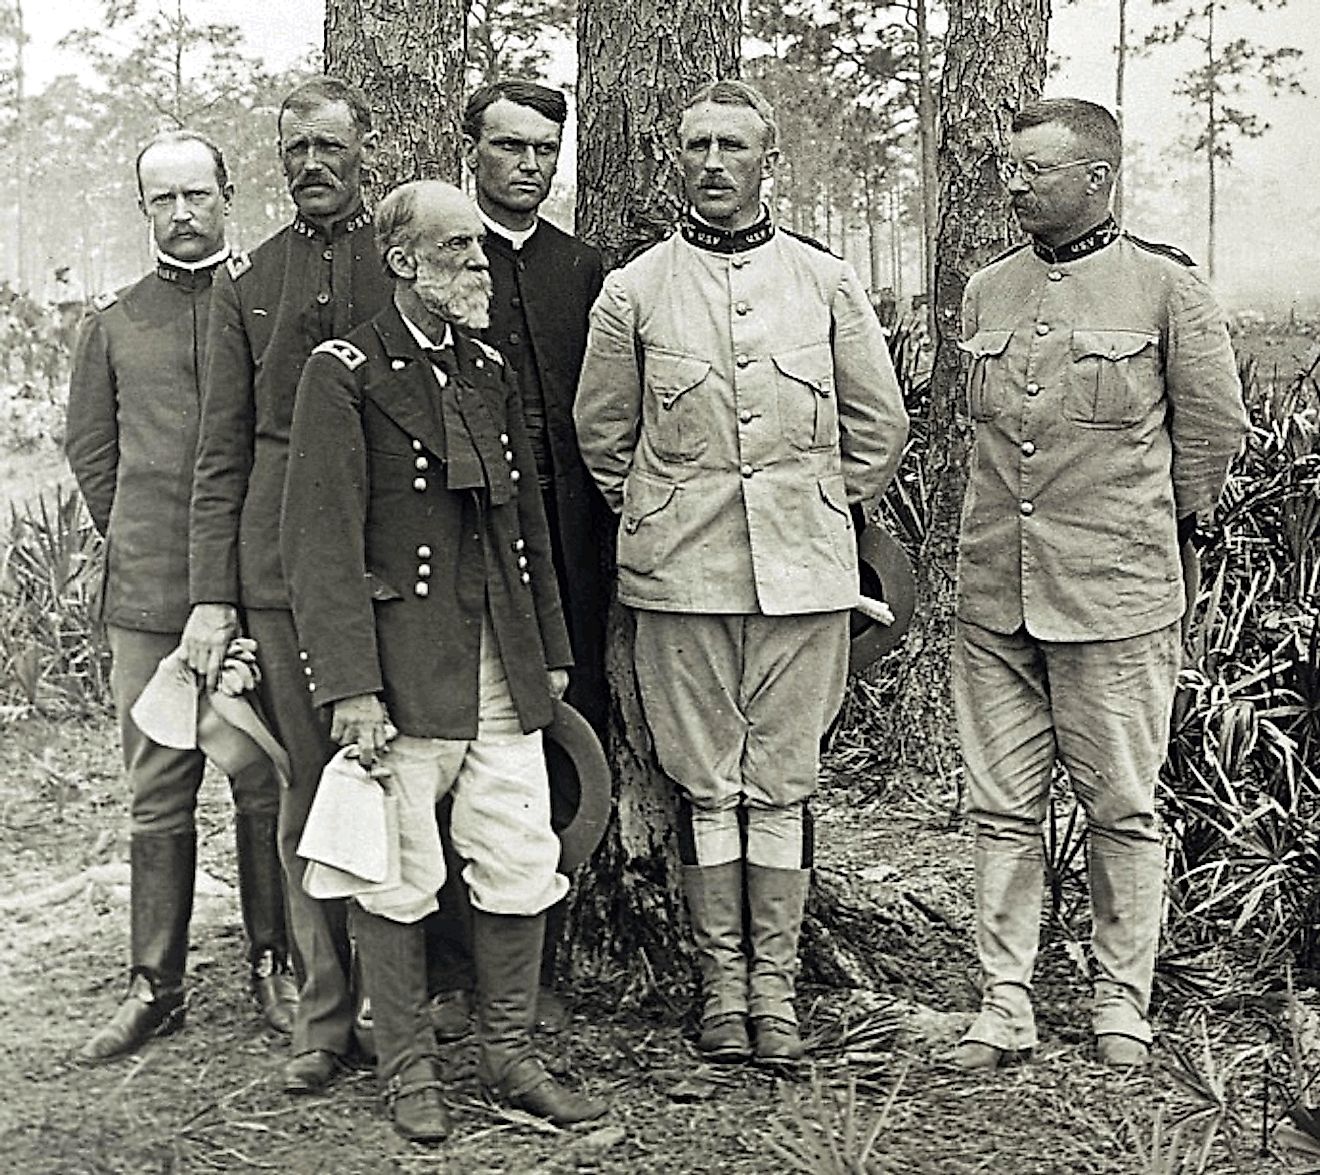 Theodore Roosevelt and officers. Image credit: Underwood &amp; Underwood / Public domain